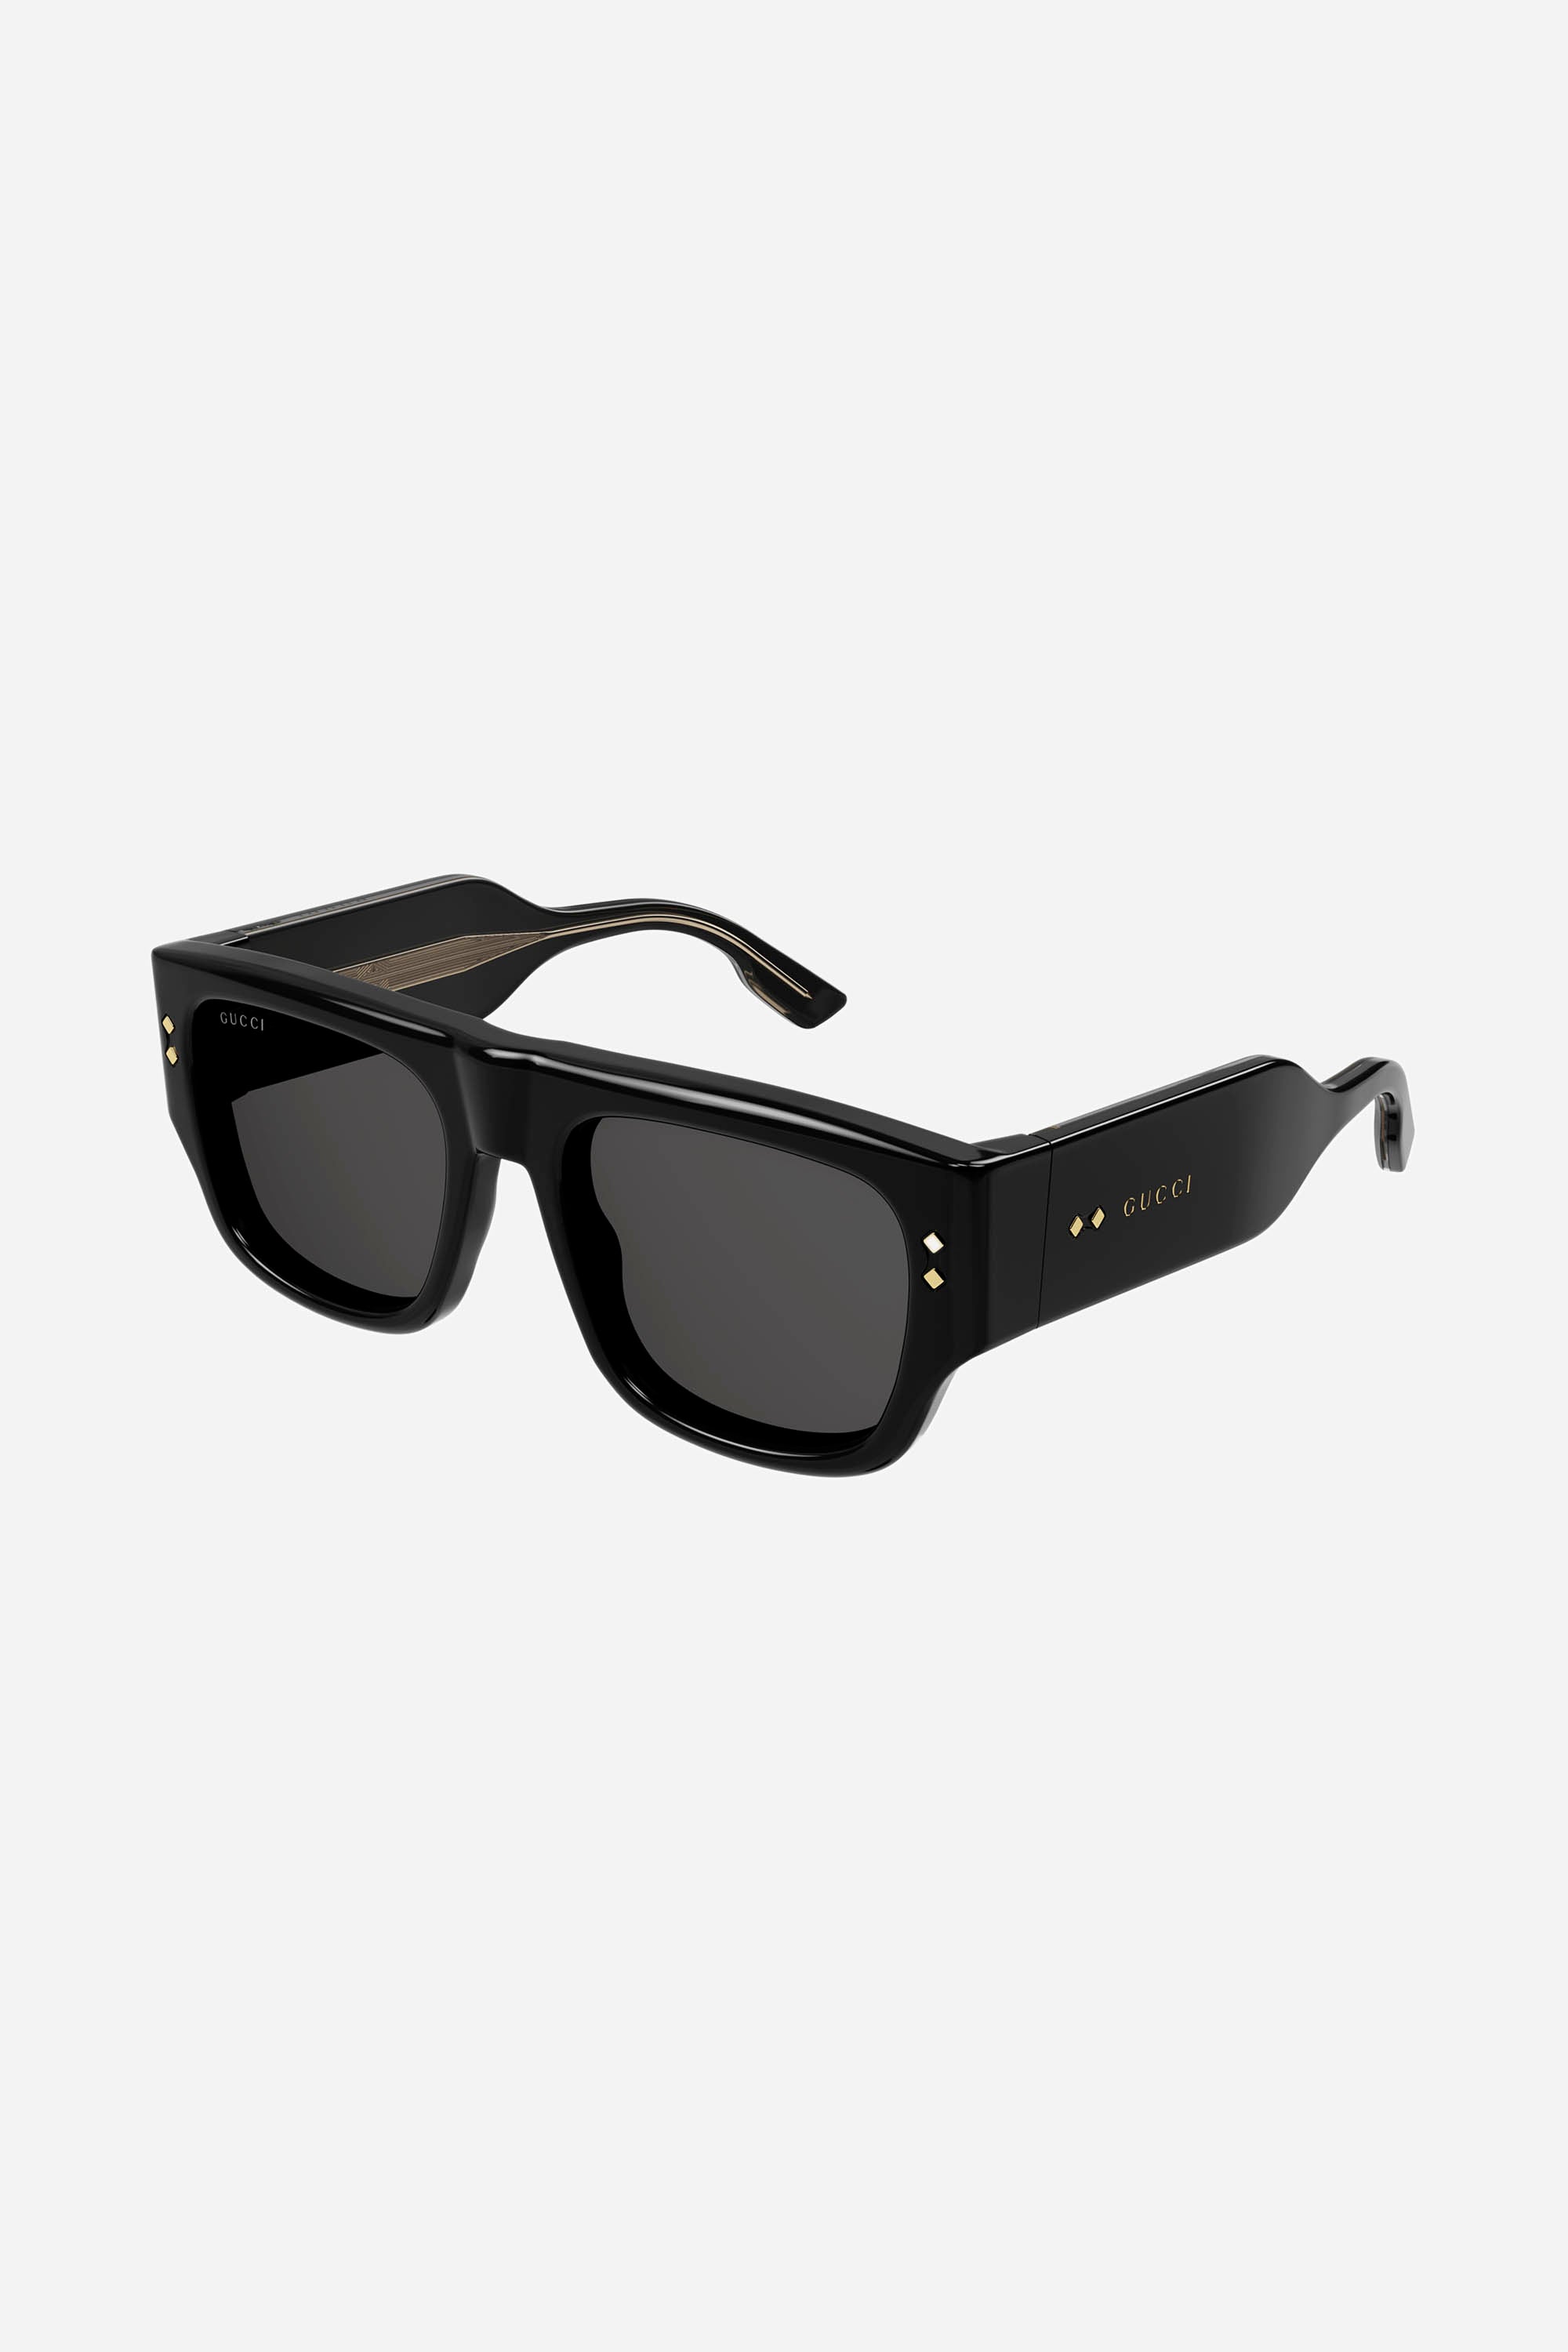 Gucci rectangular black sunglasses - Eyewear Club